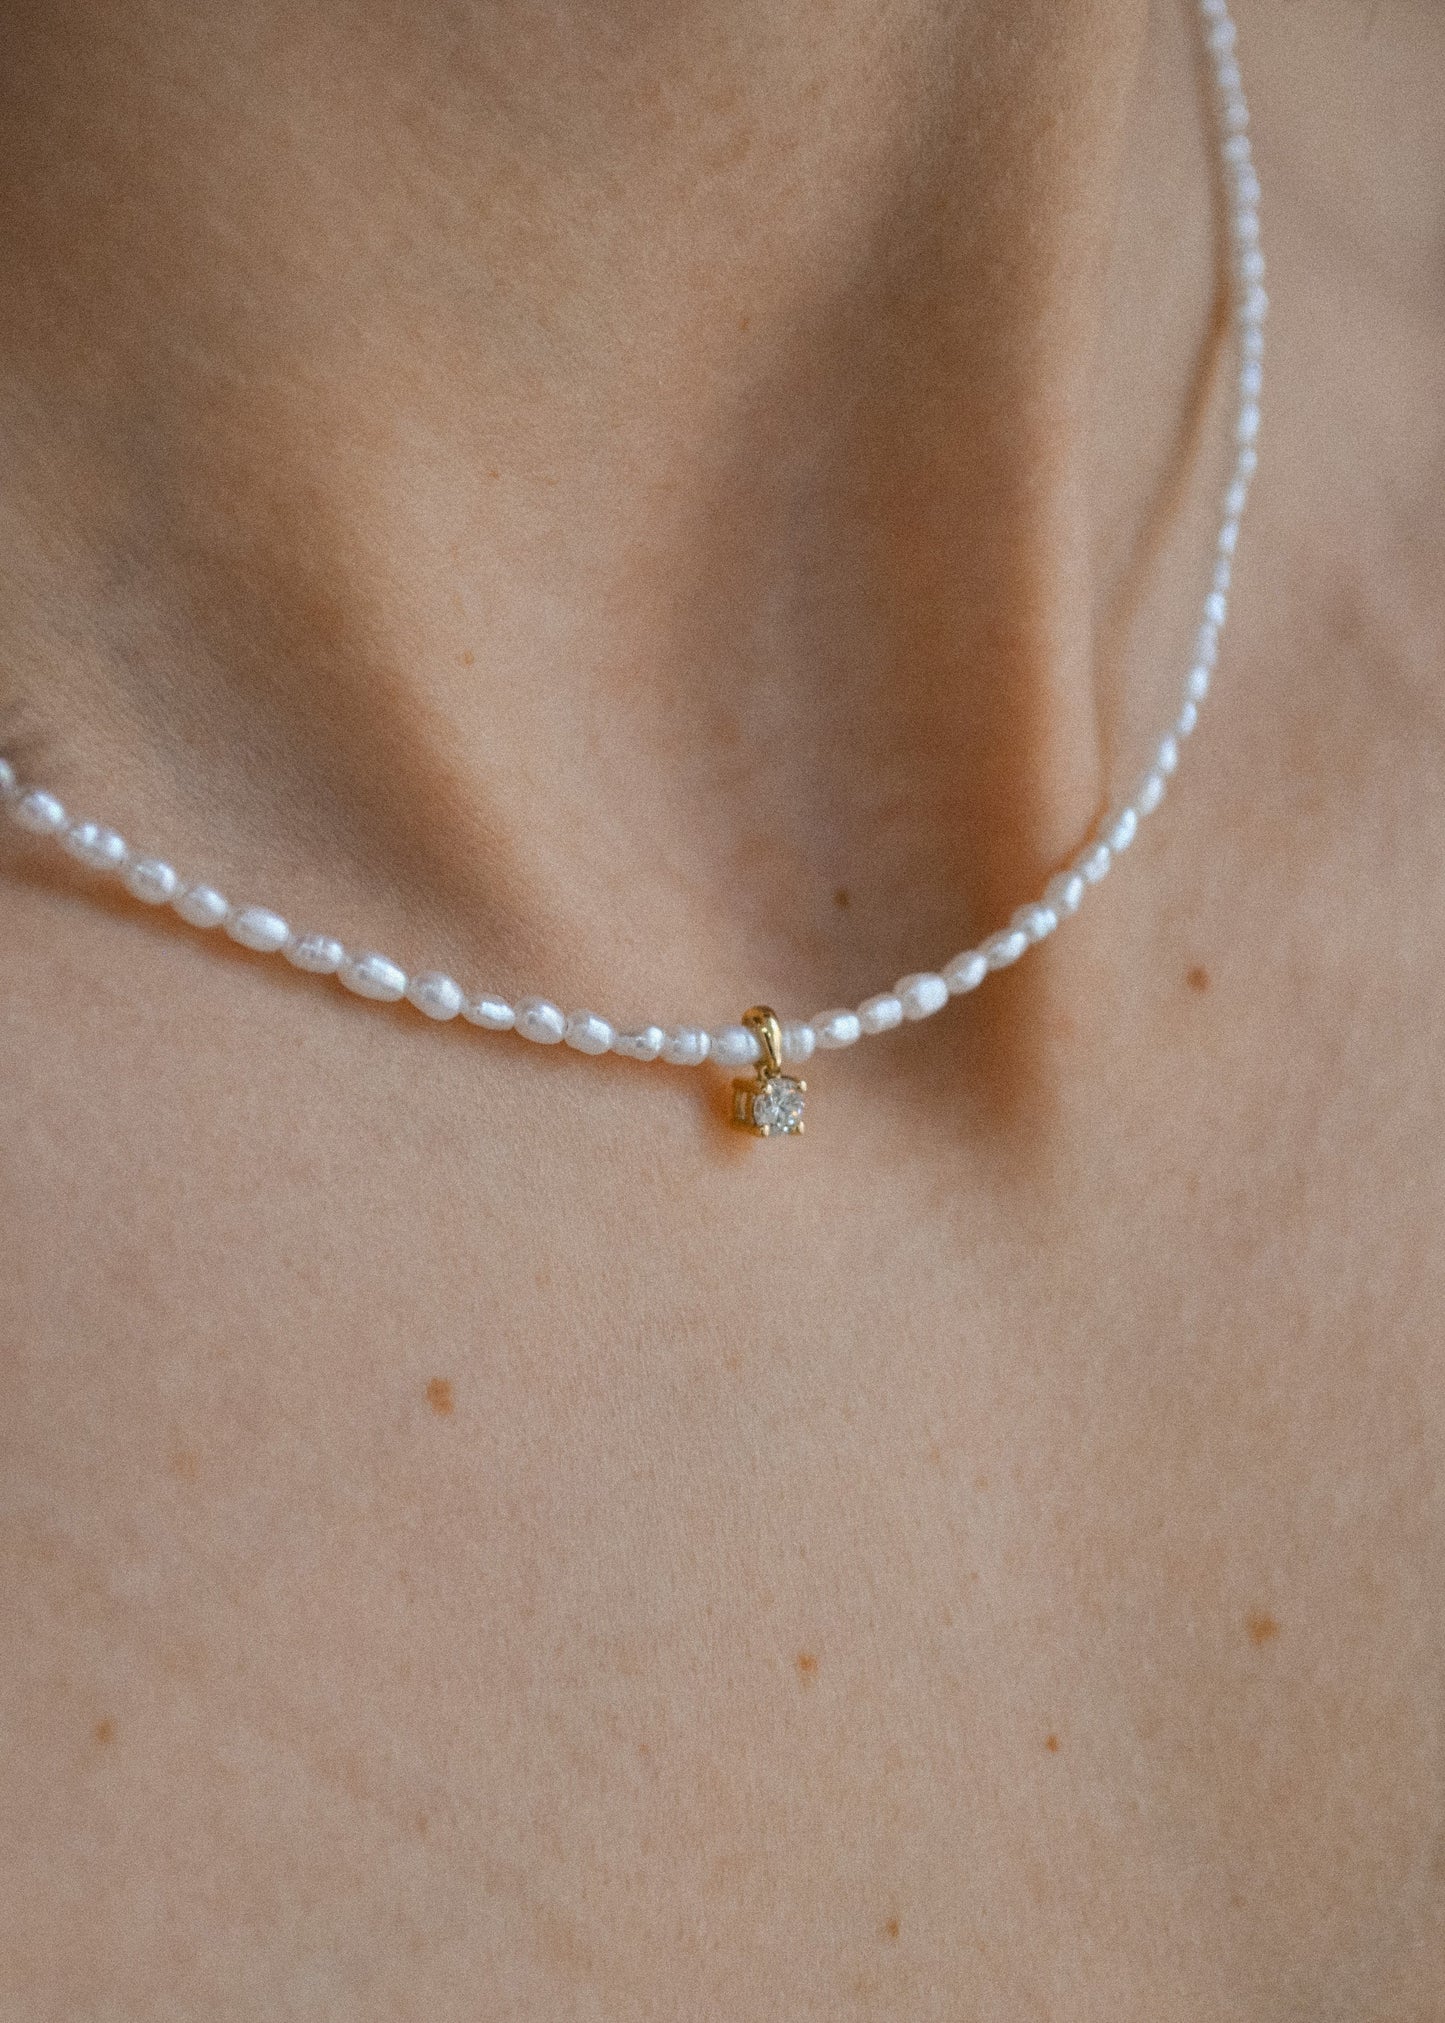 Delicate Diamond Necklace